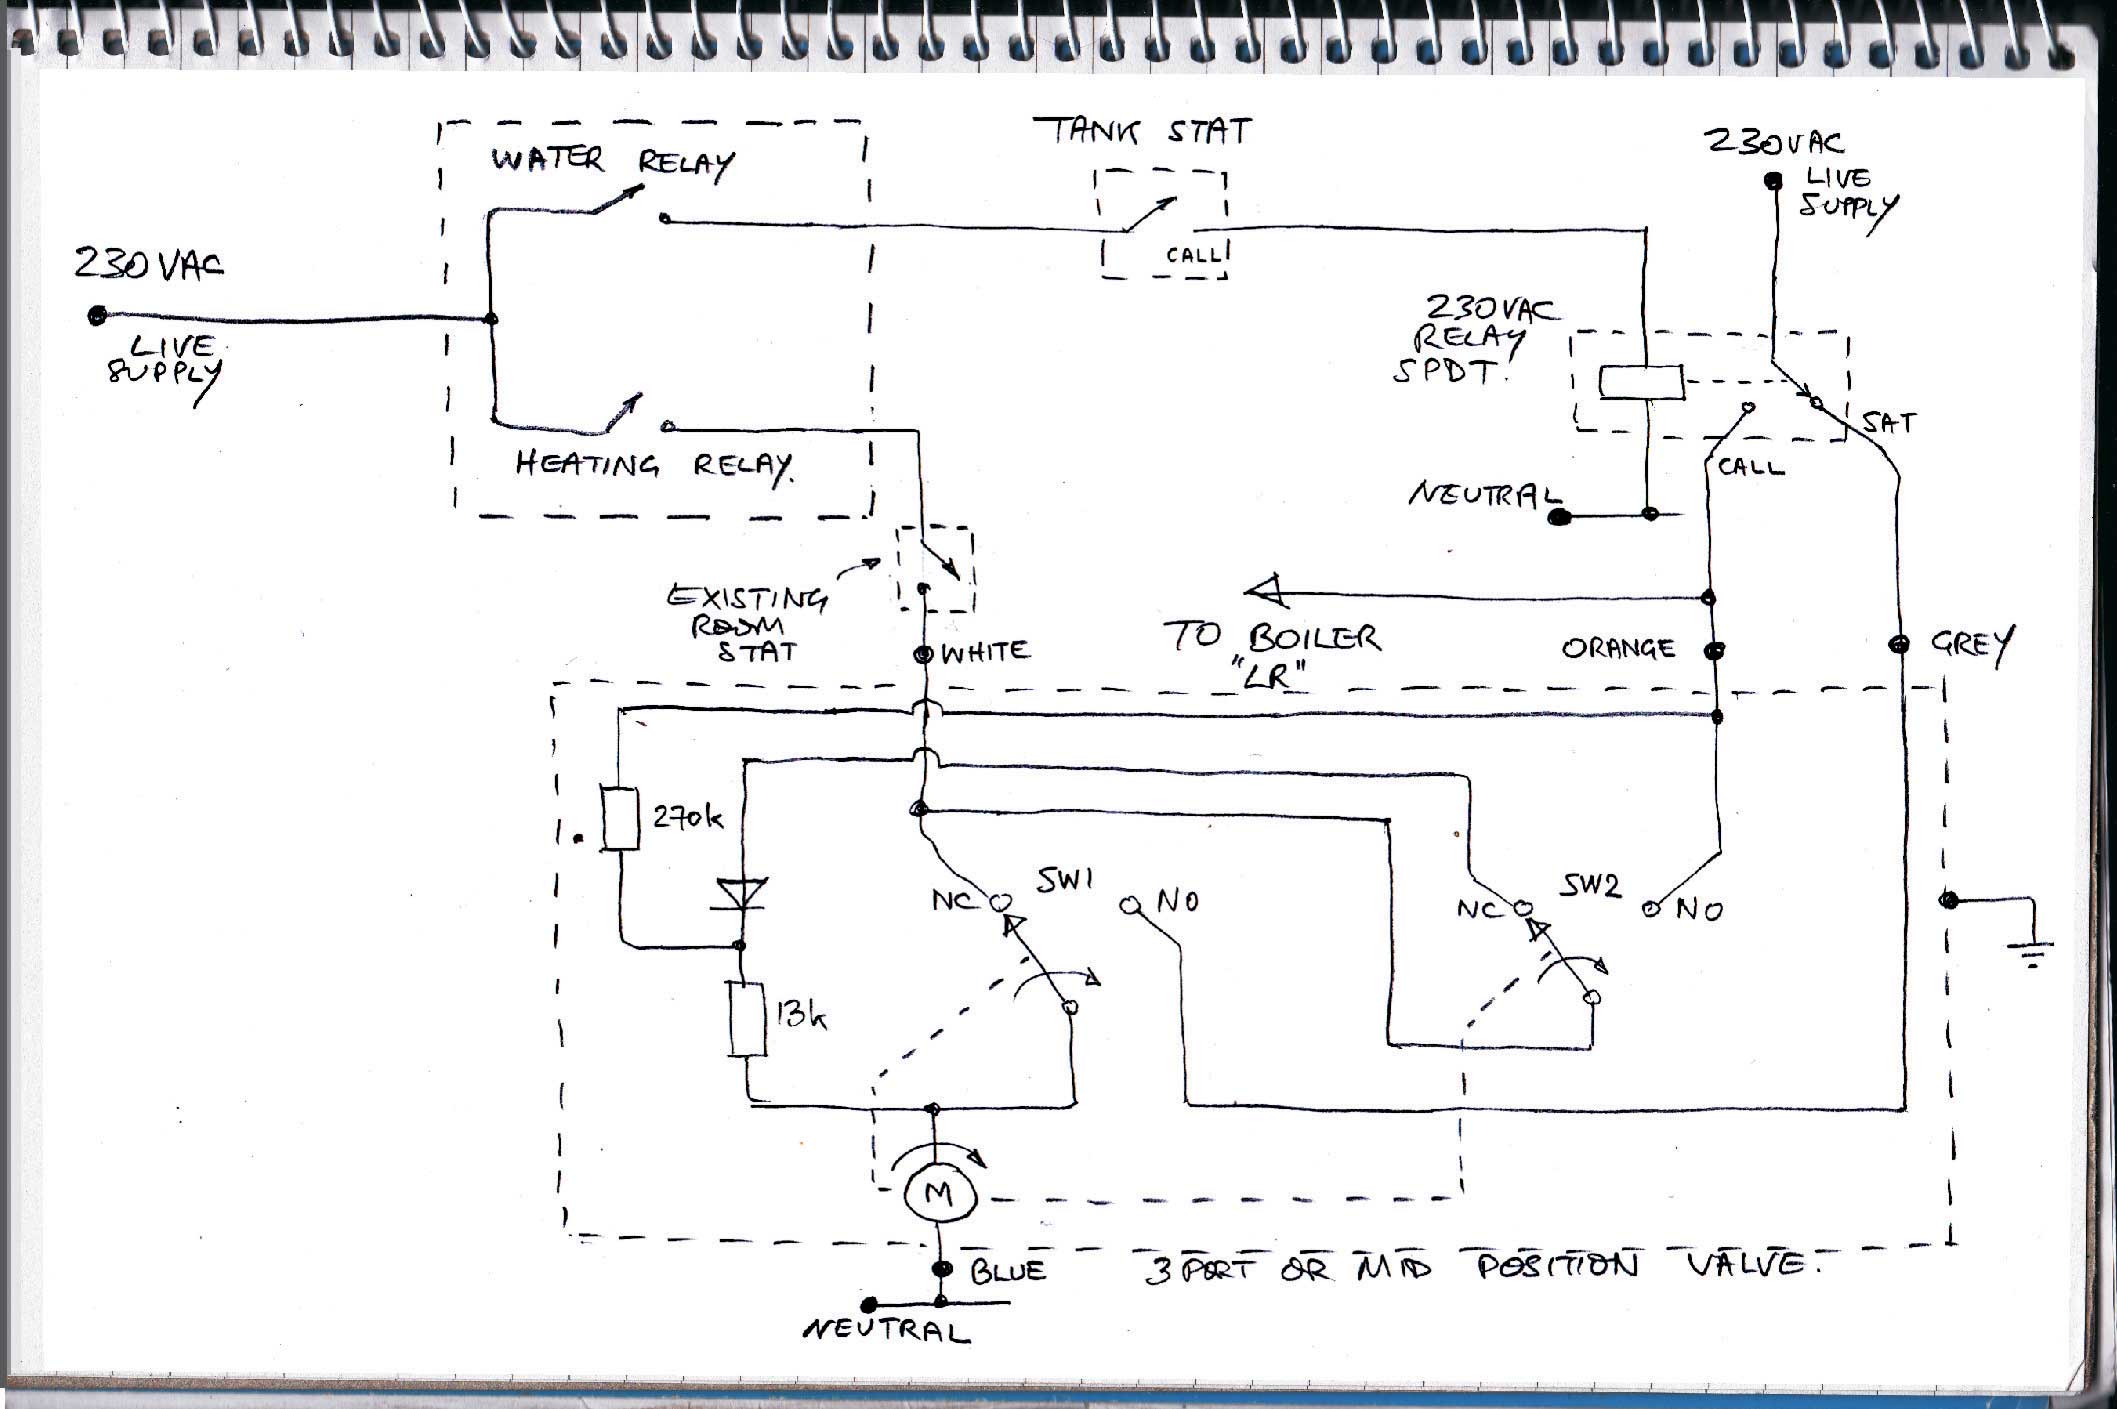 Boiler, valve, relay, stat circuit